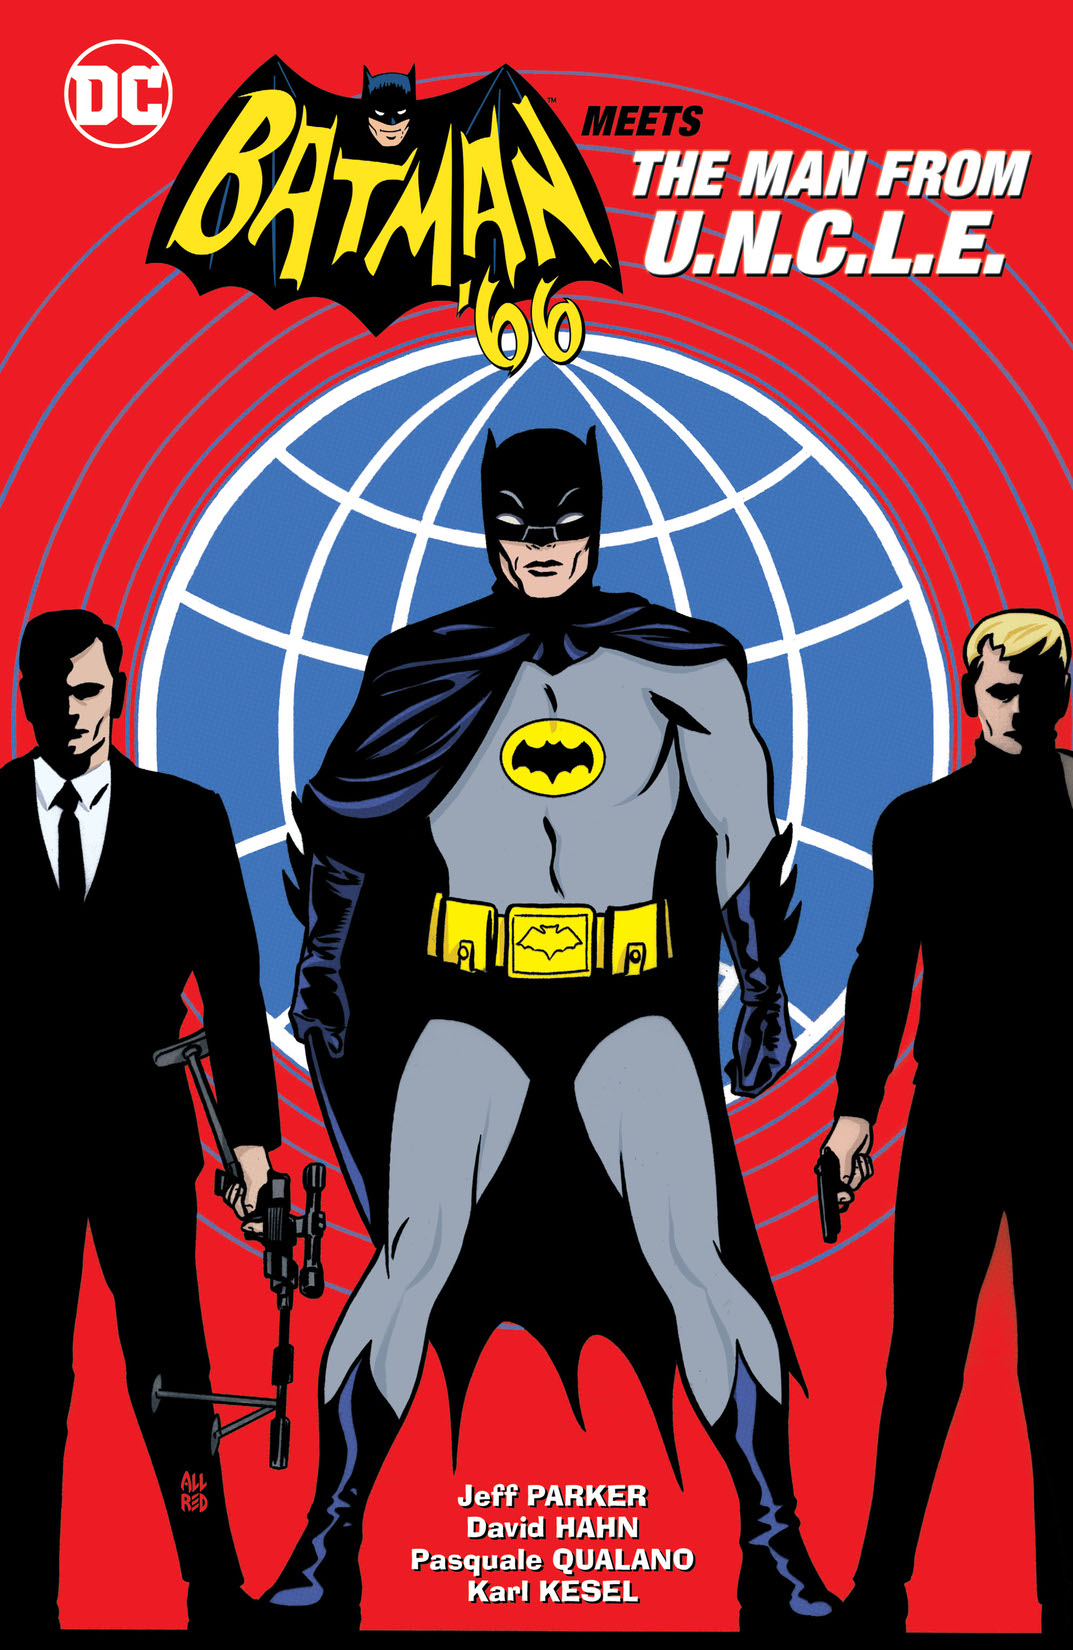 Batman '66 Meets the Man From U.N.C.L.E. preview images